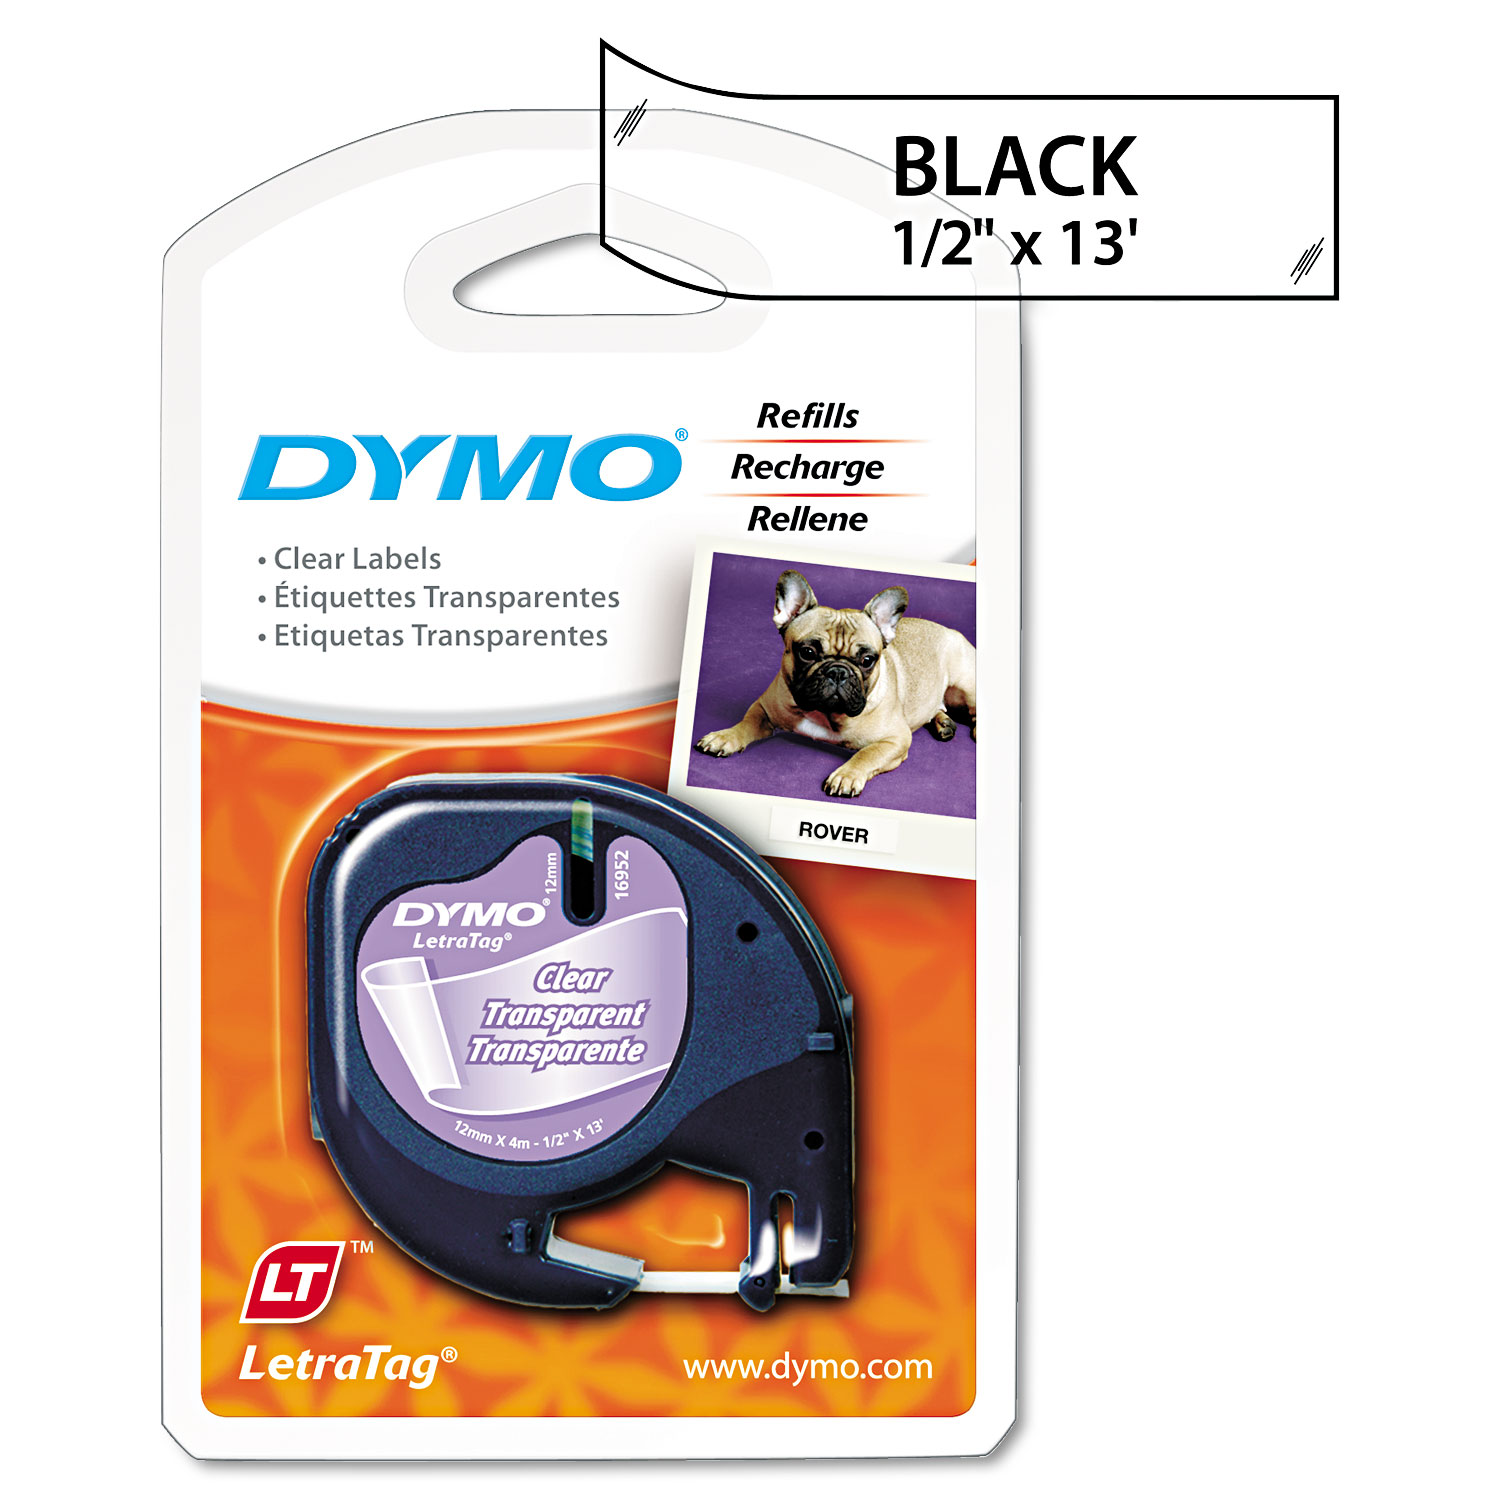  DYMO 16952 LetraTag Plastic Label Tape Cassette, 0.5 x 13 ft, Clear (DYM16952) 